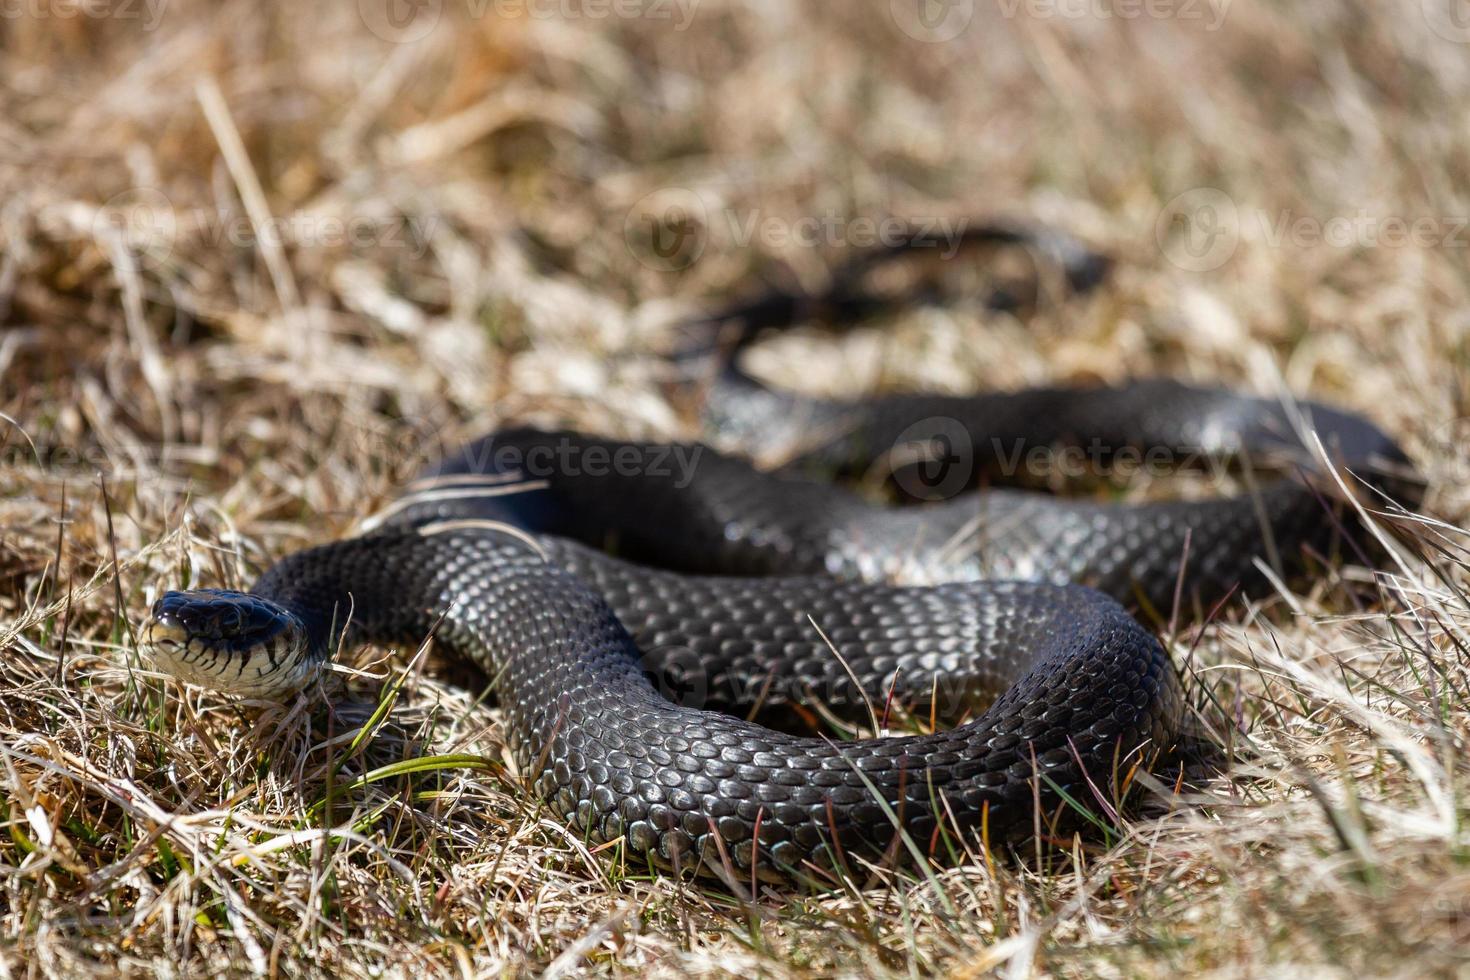 gräs orm i naturlig miljö foto